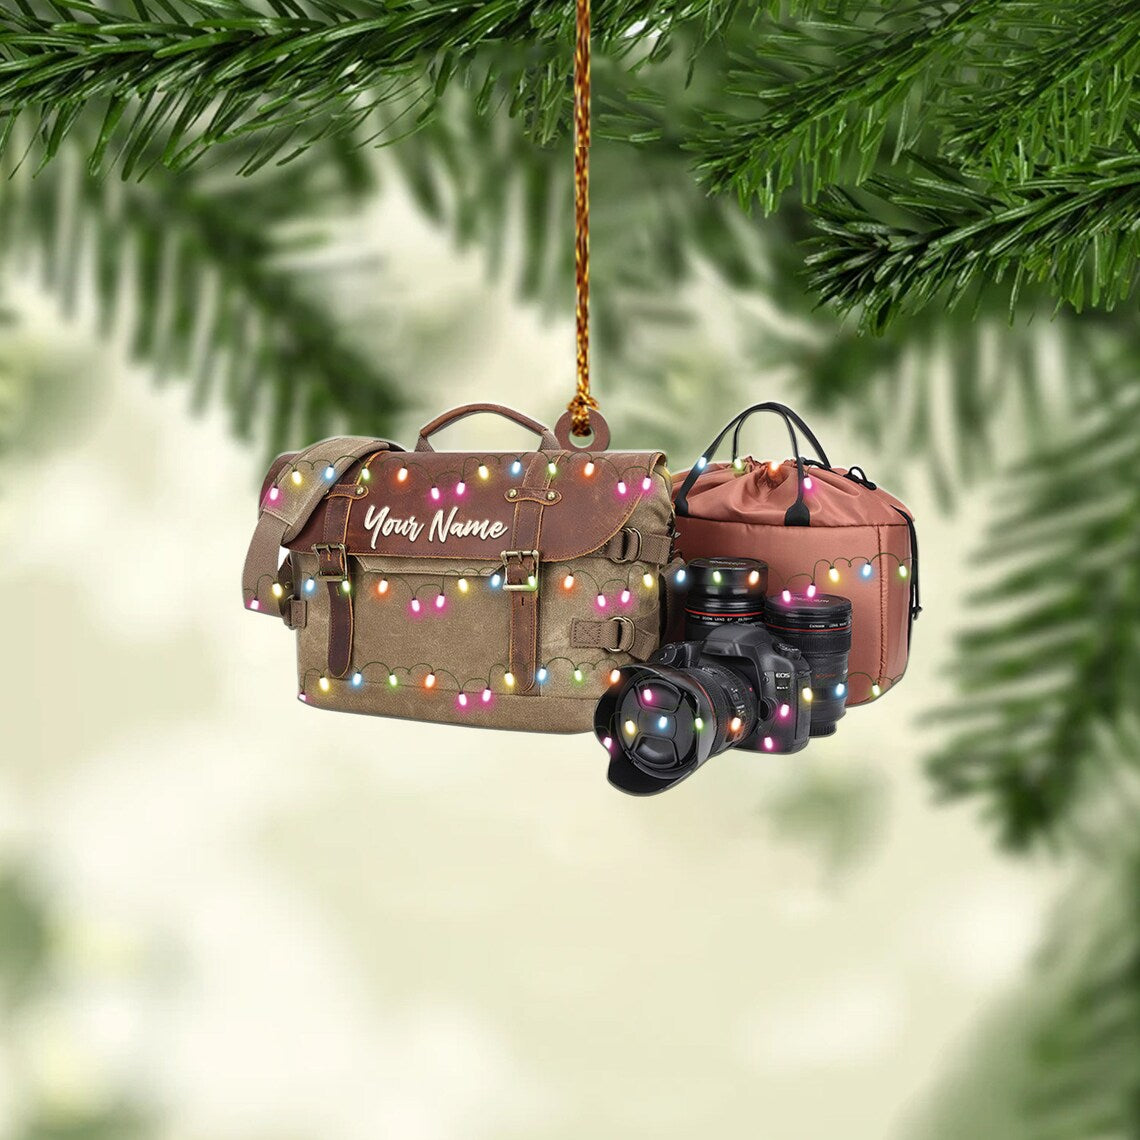 Personalized Camera Bag Christmas Ornament/ Gift For photographer / love Camera tree hanging Ornament Decor/ Camera Xmas decor